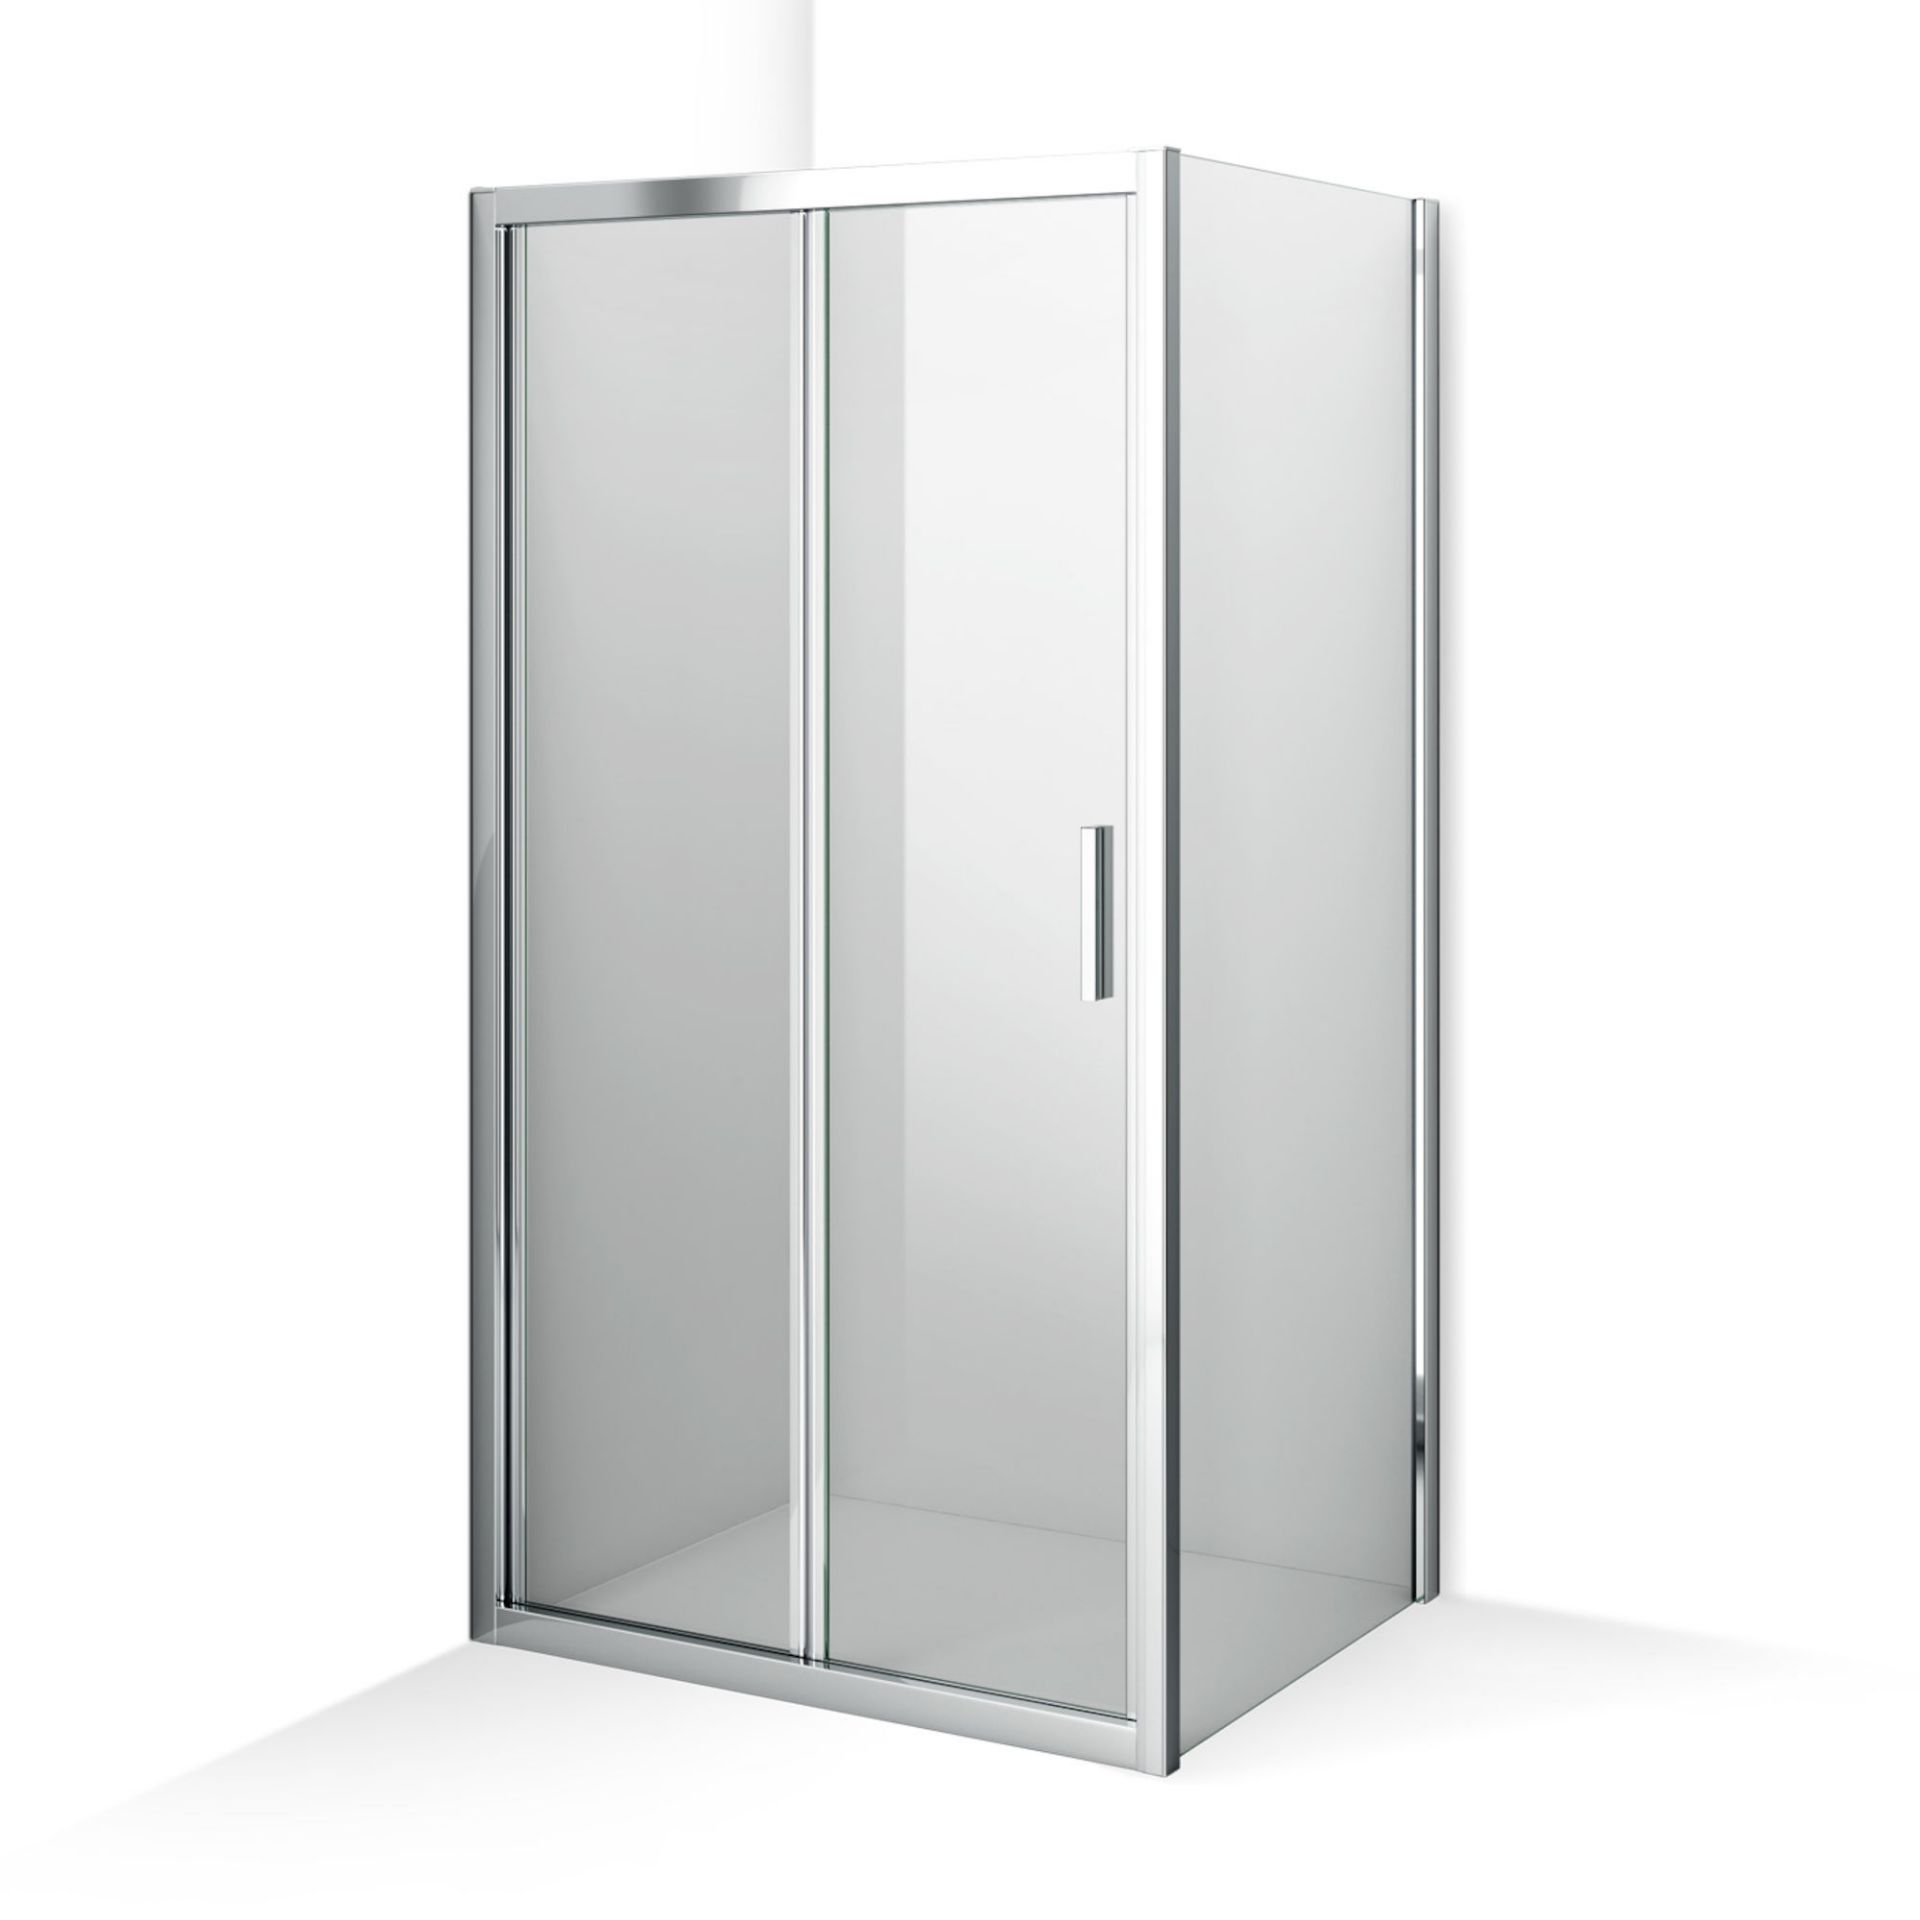 (EY132) 900x900mm - 6mm - Elements EasyClean Bi Fold Door Shower Enclosure. RRP £329.99. 6mm - Image 4 of 4